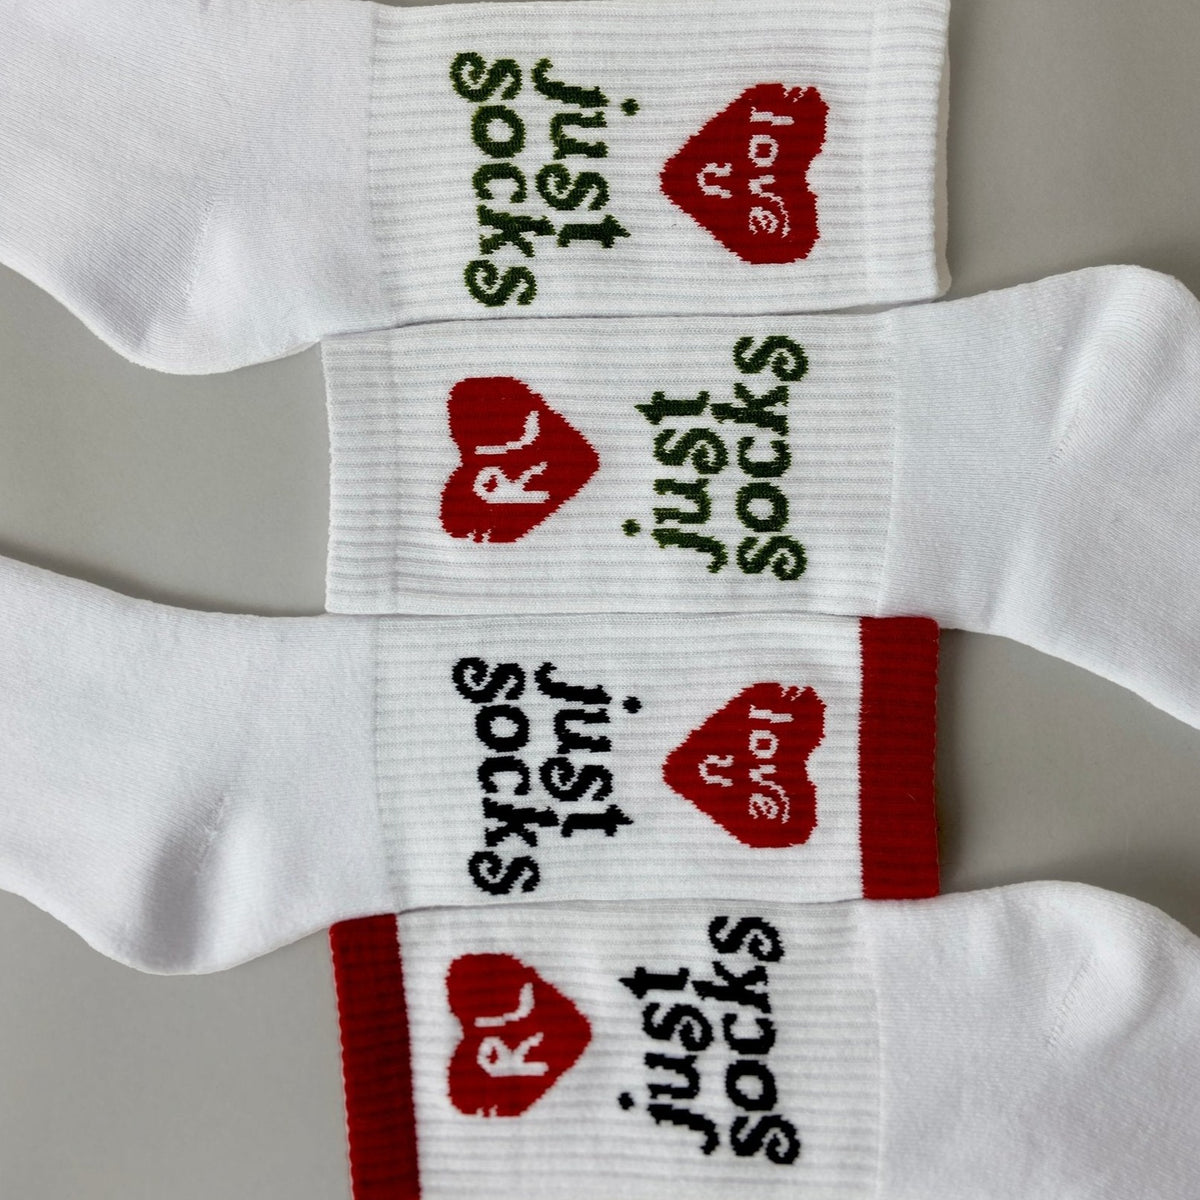 RL Love U Socks - White/Olive - RED LETTERS